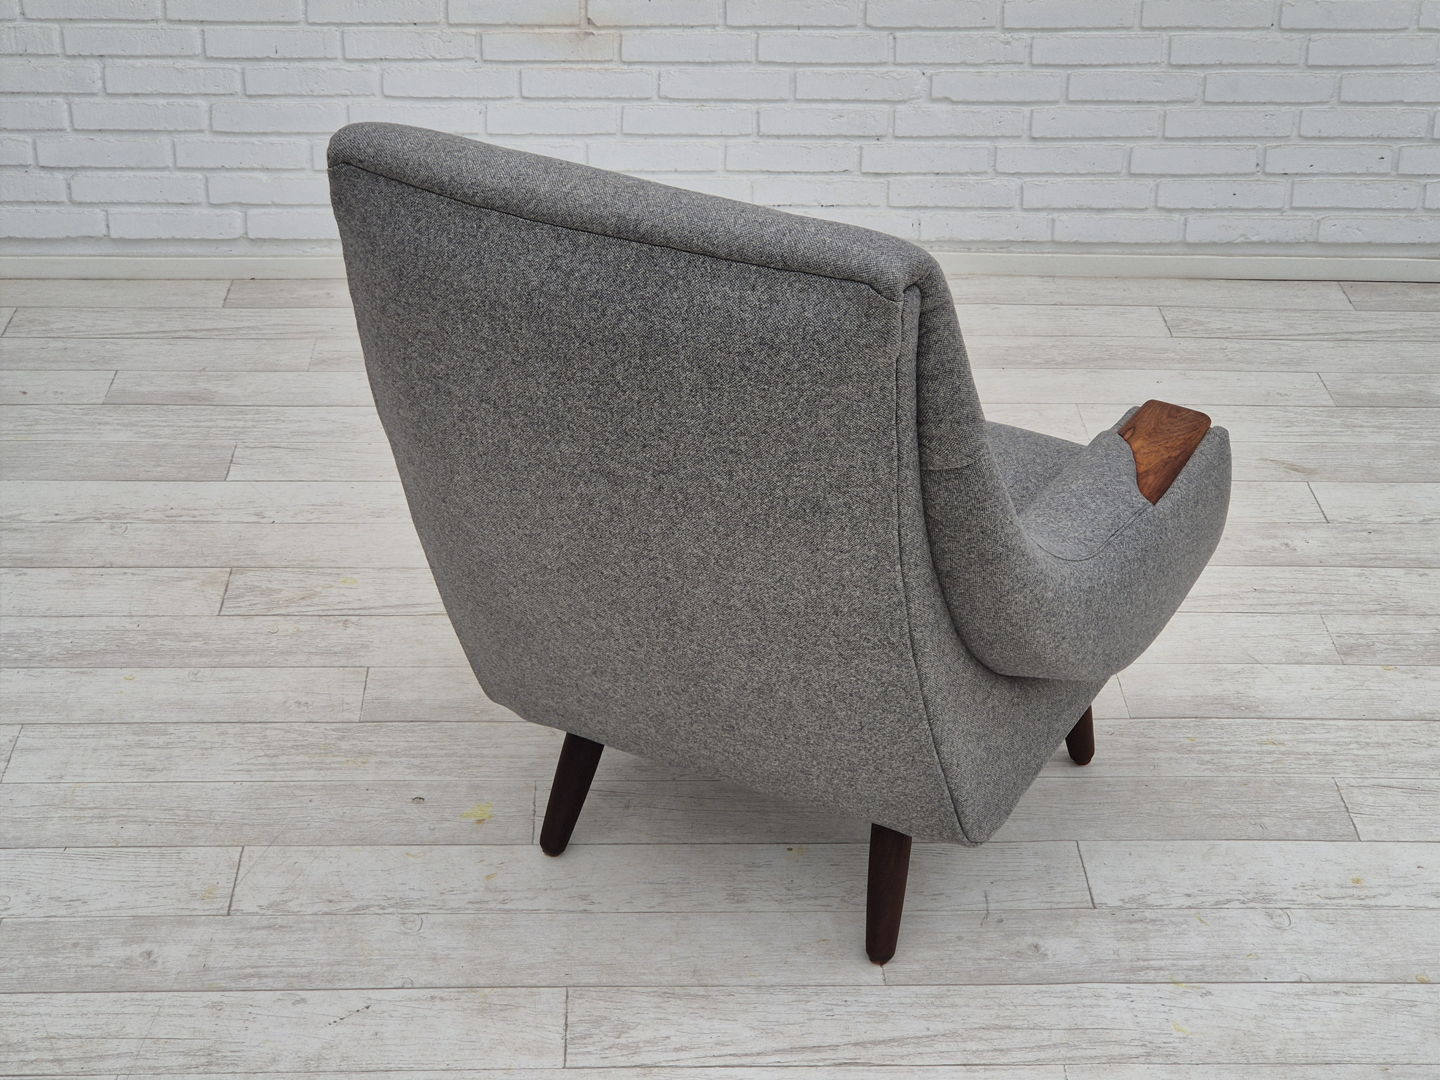 1970s, recliner, Danish design by H.W.Klein for Bramin Møbler, completely reupholstered, furniture wool.